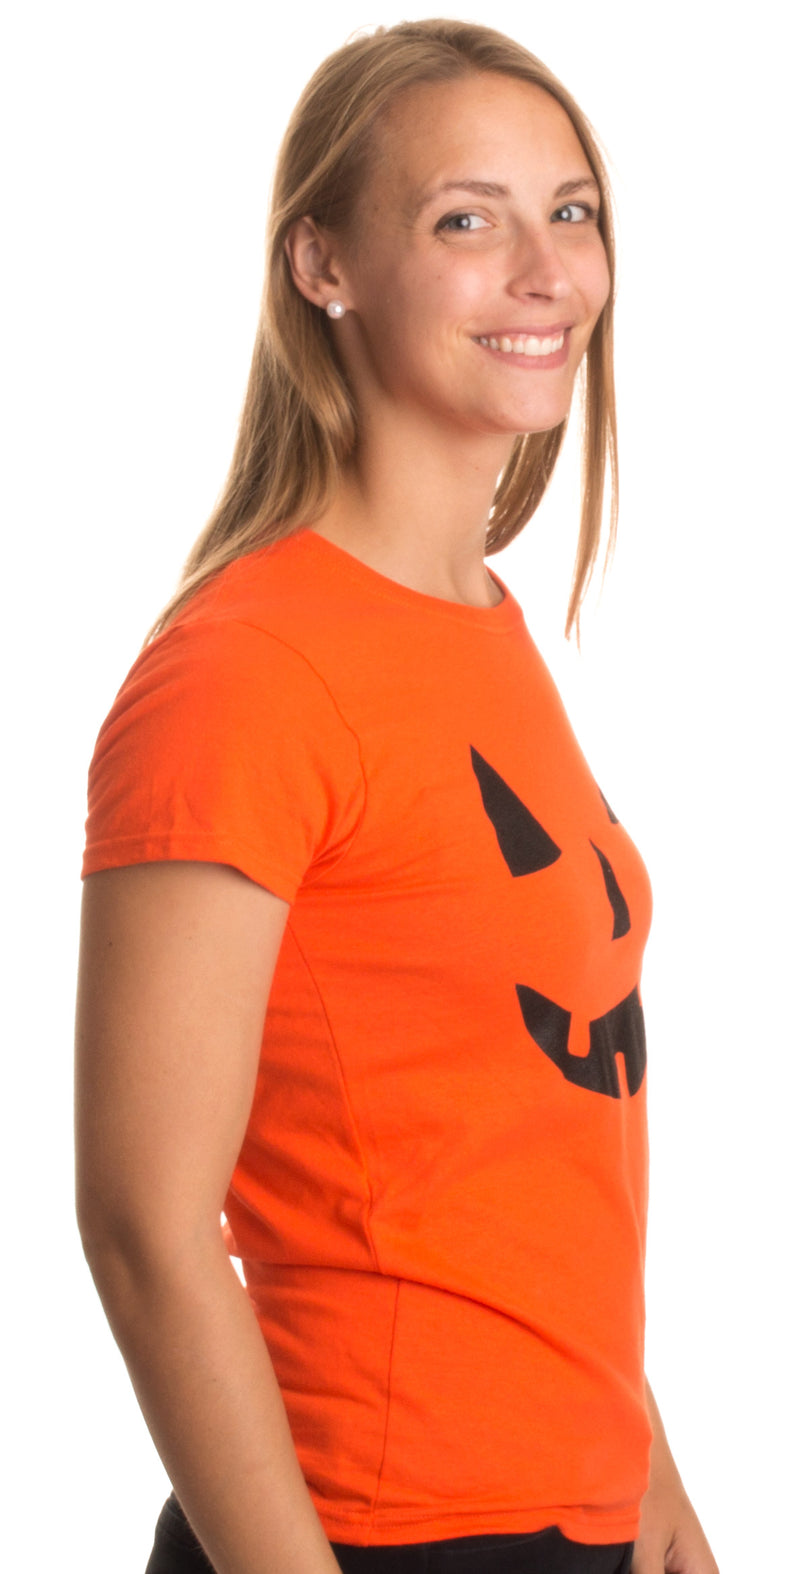 JACK O' LANTERN PUMPKIN Women's T-shirt / Easy Halloween Costume Fun Tee